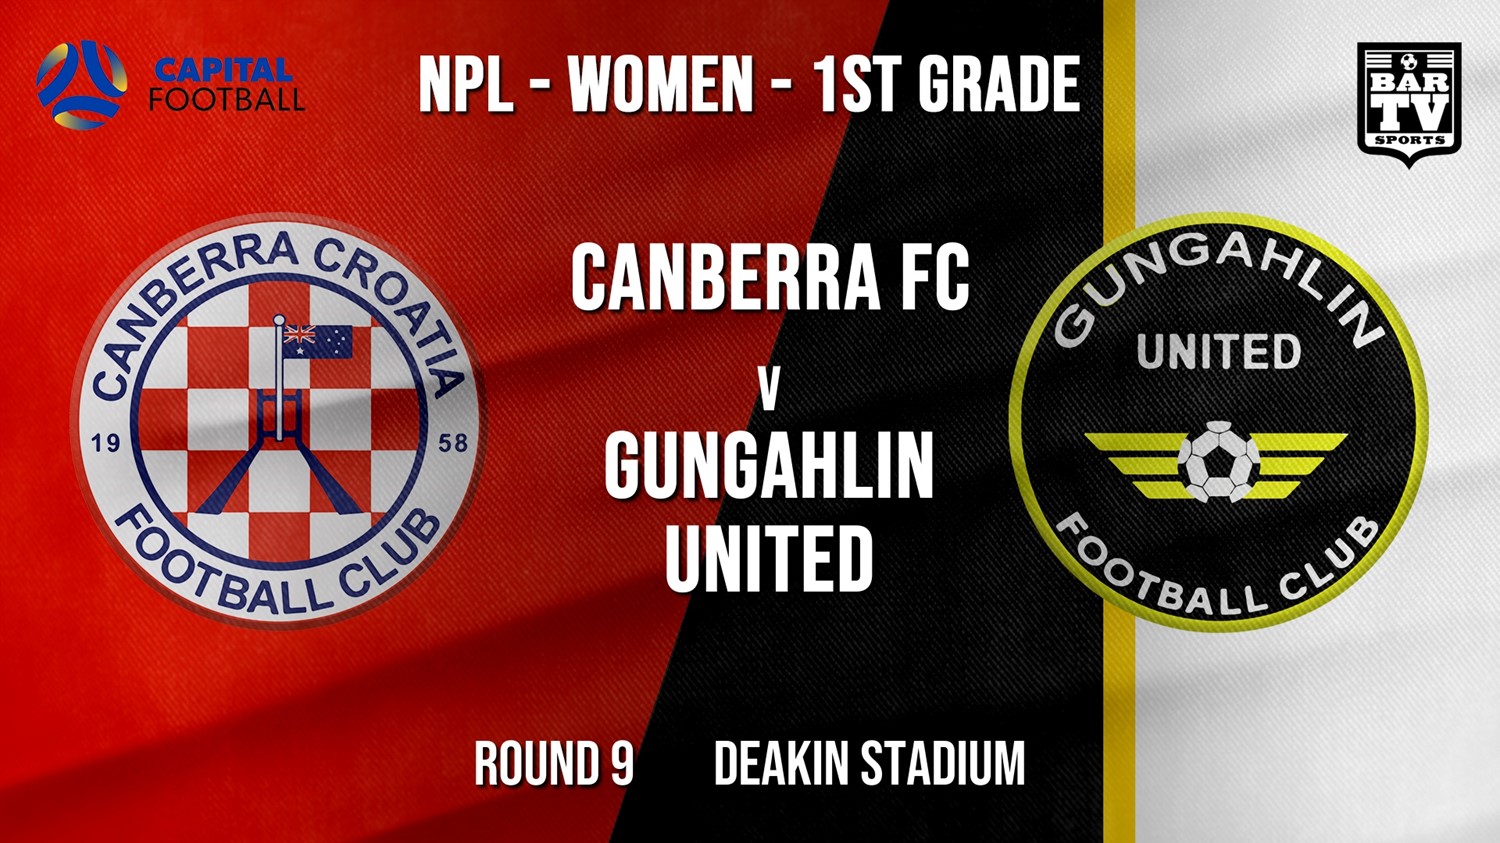 NPLW - Capital Round 9 - Canberra FC (women) v Gungahlin United FC (women) Minigame Slate Image